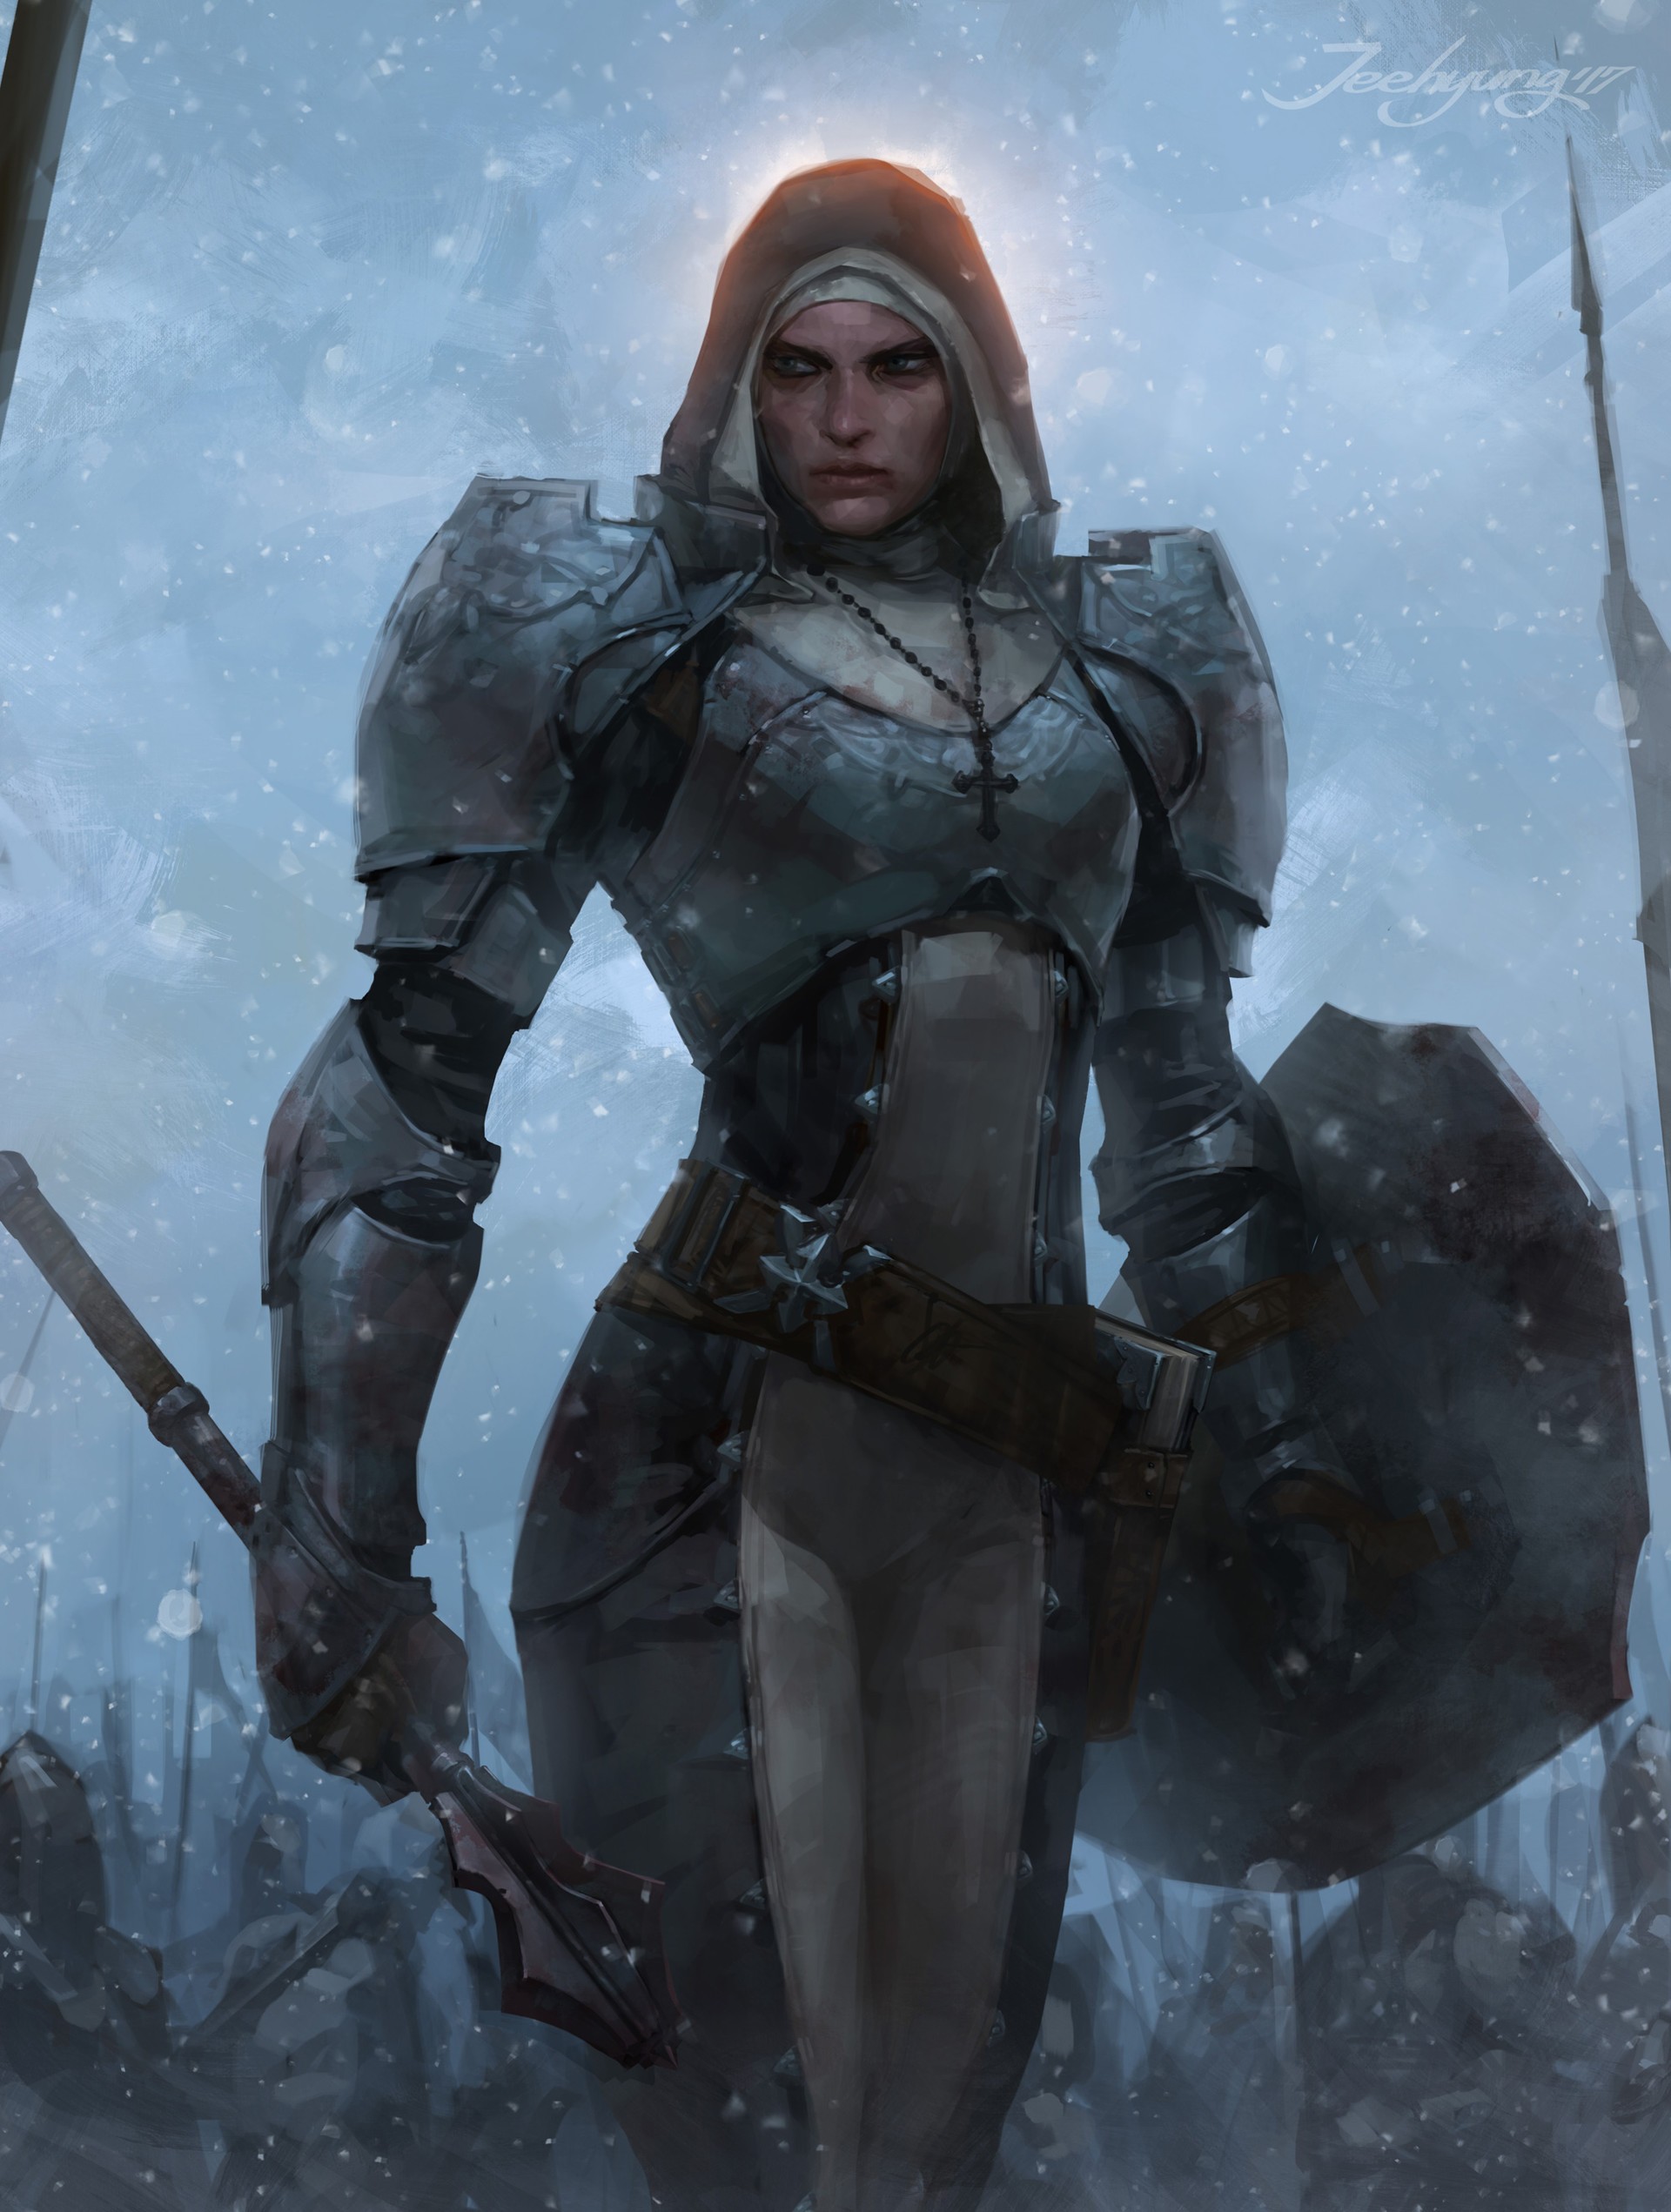 General 1920x2542 fantasy art warrior fantasy girl shield armor mace portrait display watermarked digital art